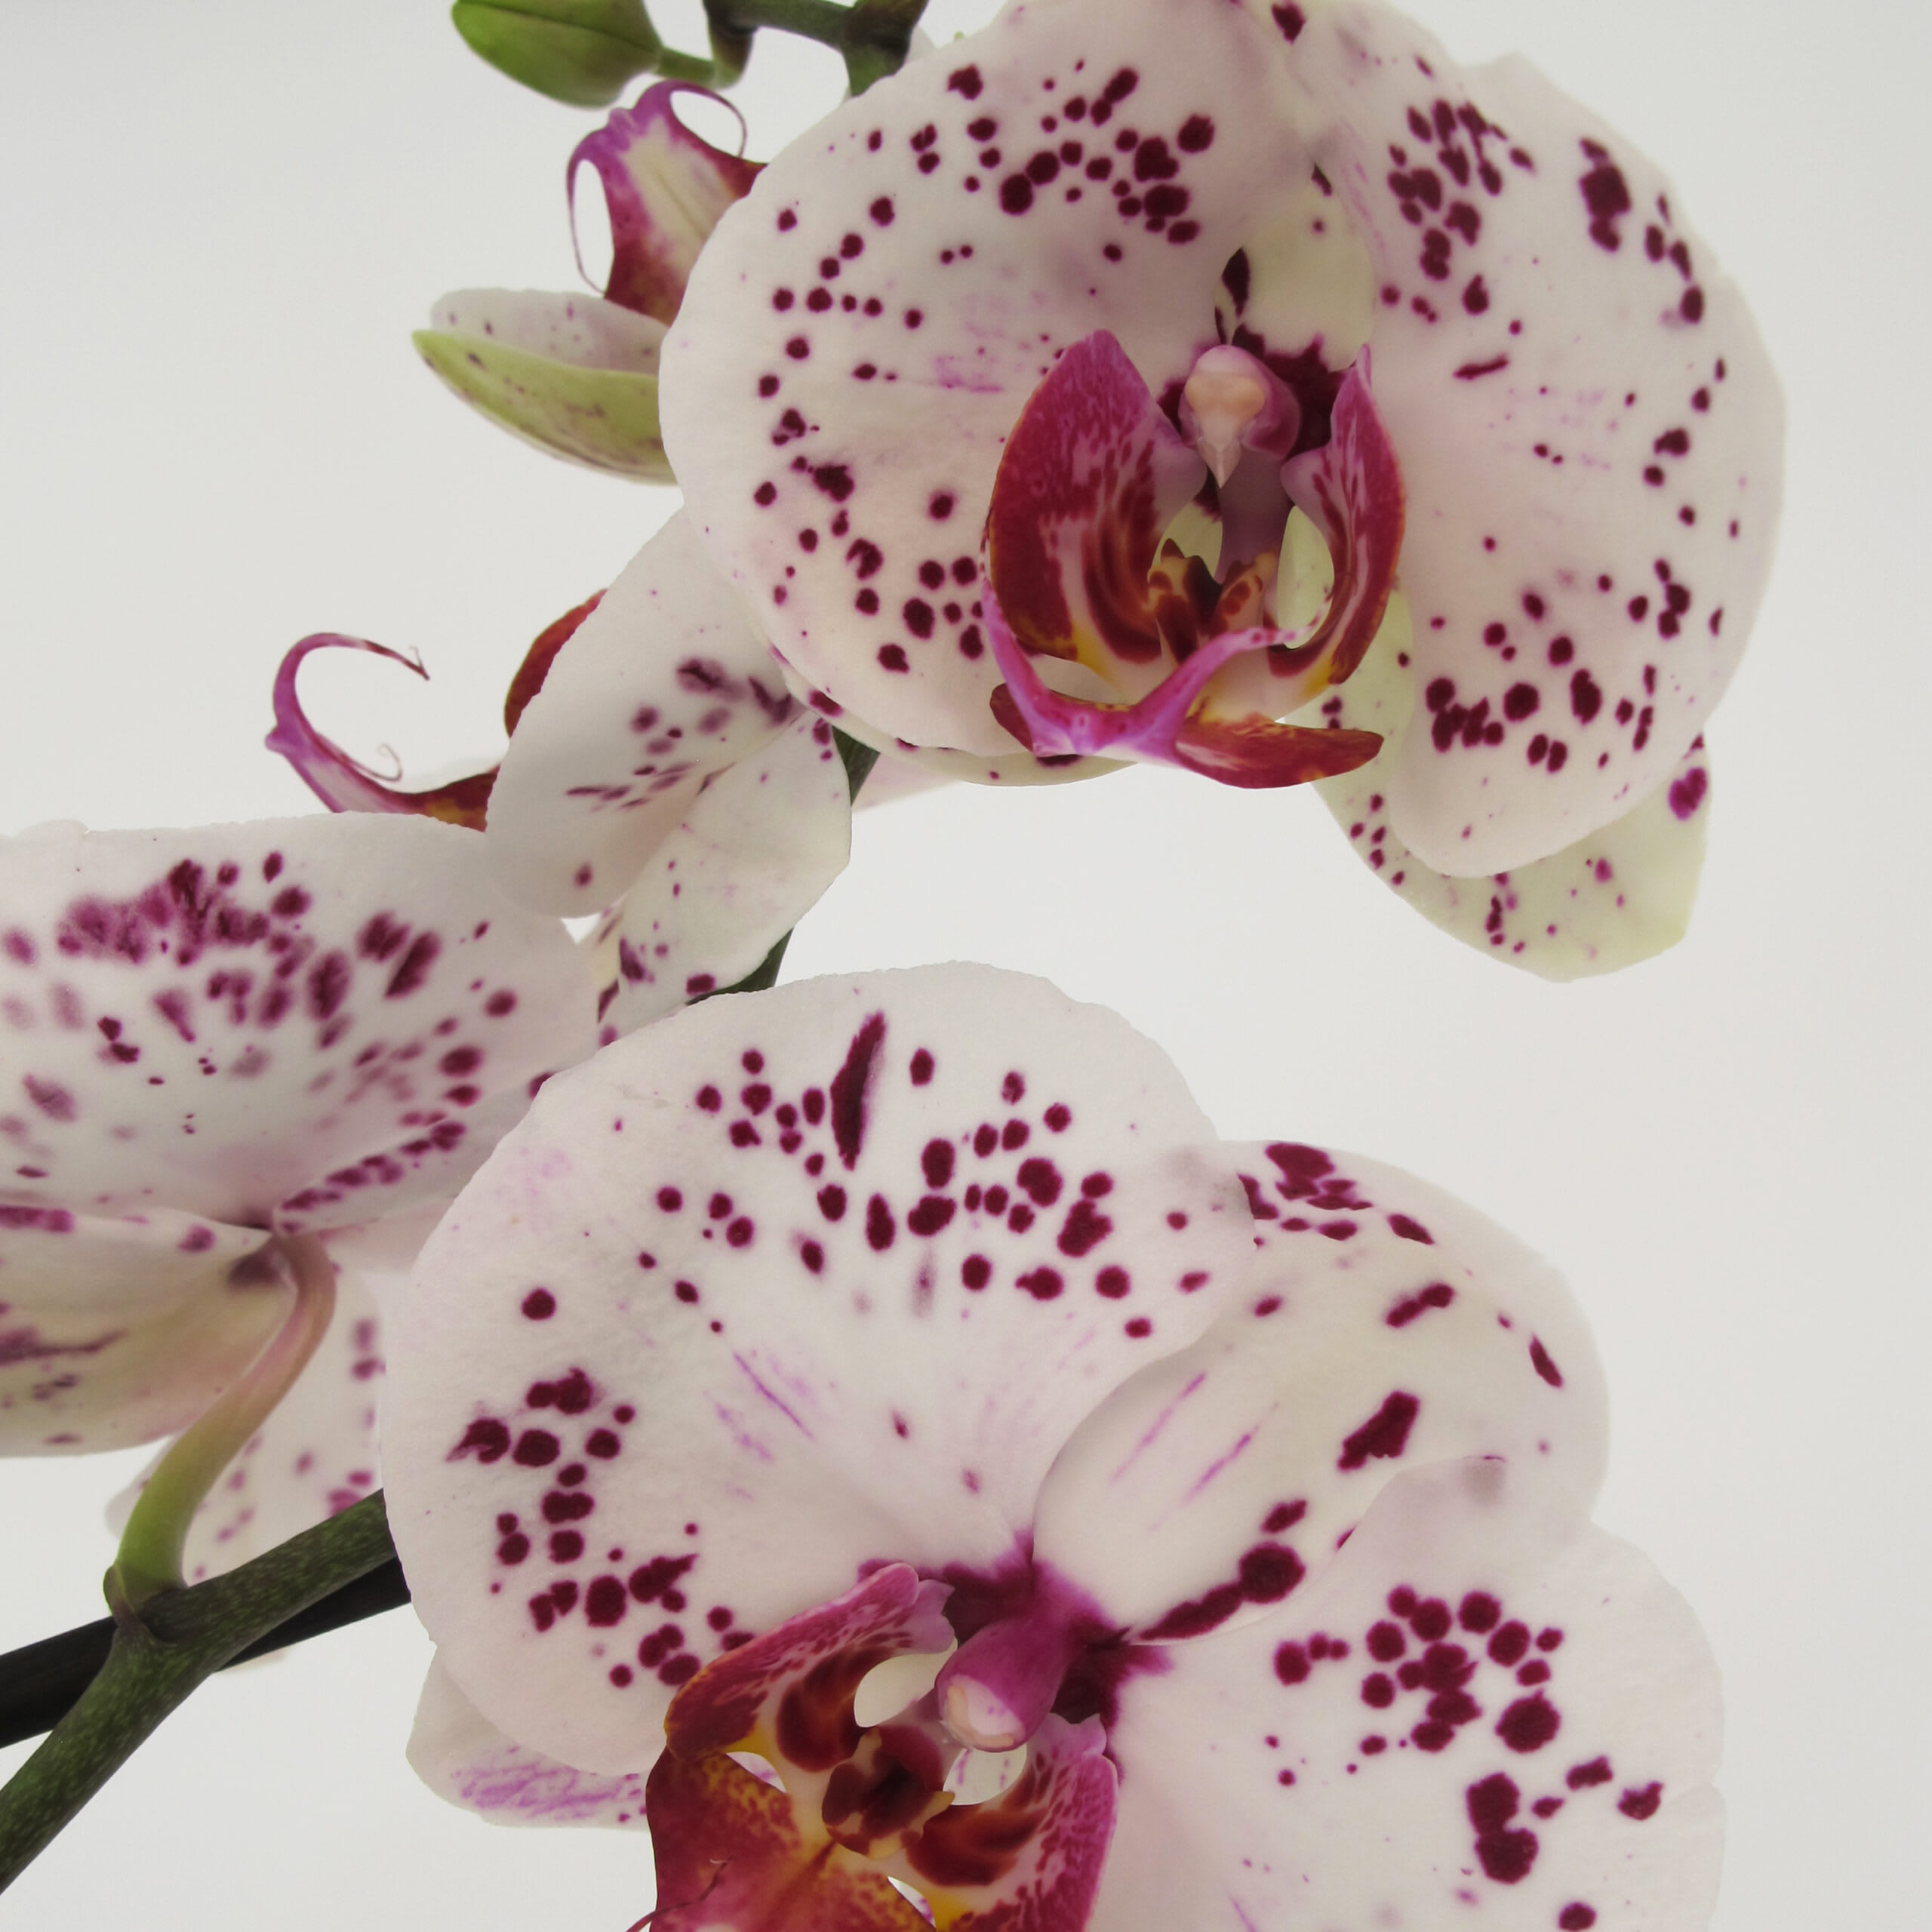 Orchidea Phalaenopsis Bicolore Pianta Vera H 60/70 cm Vaso Ø 12 cm